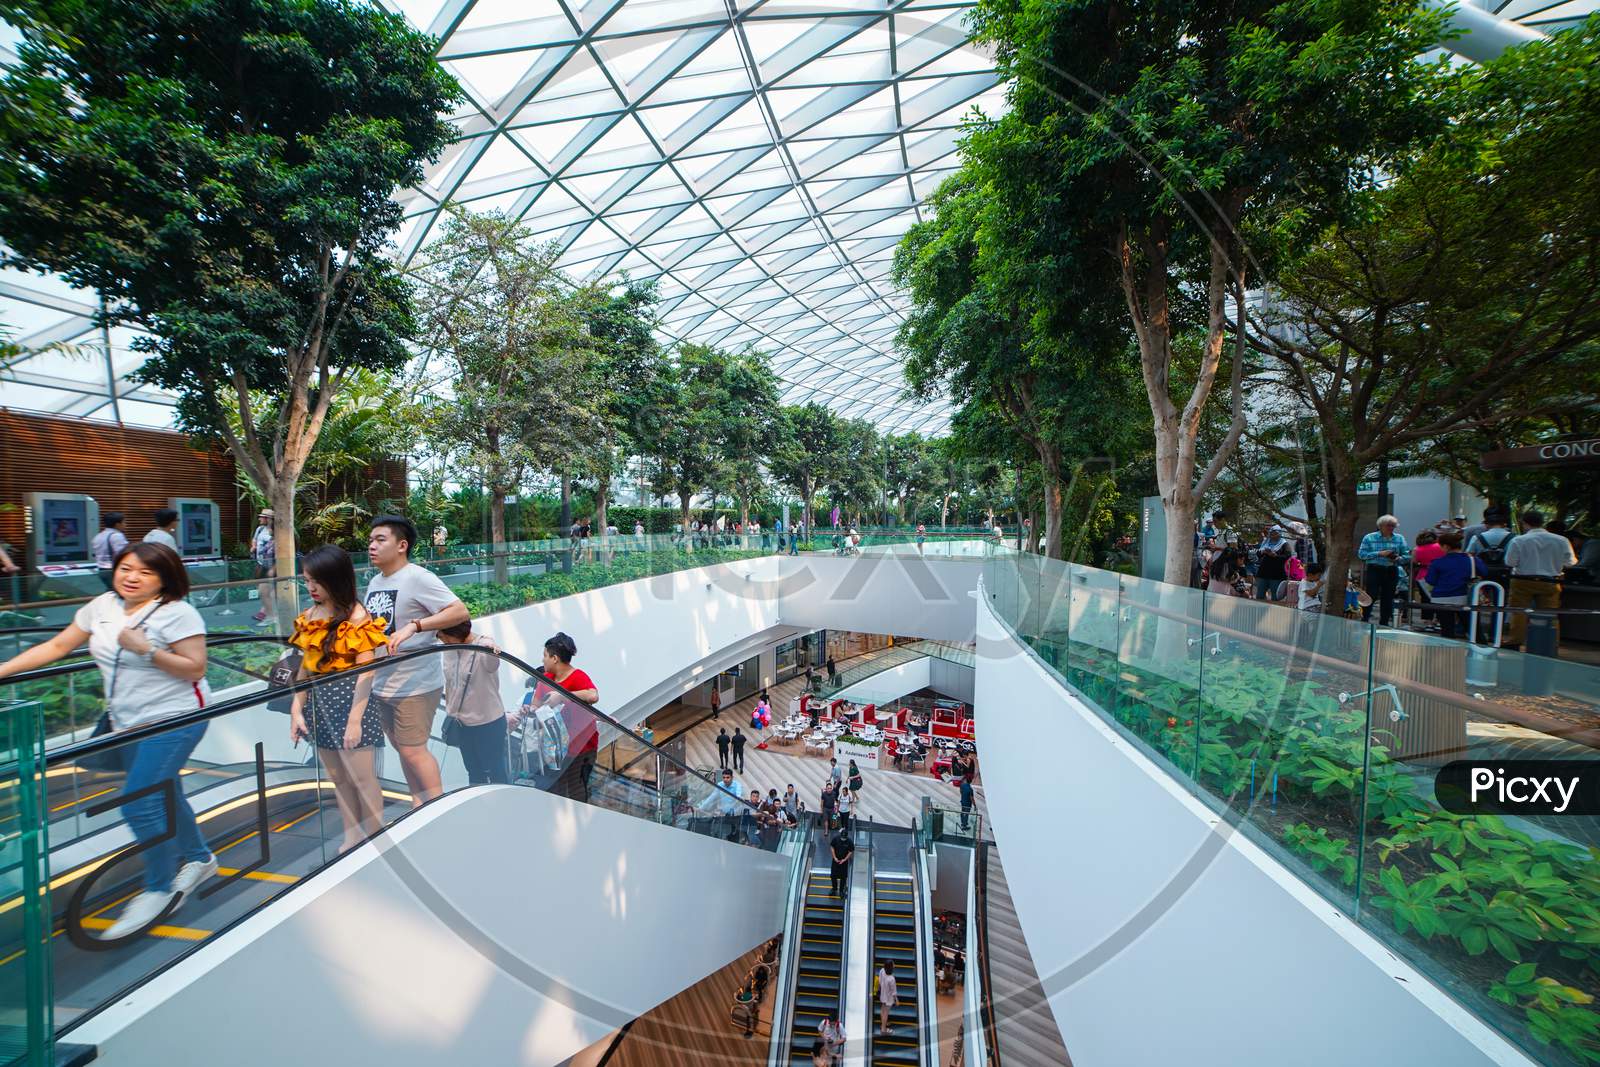 Singapore City, Singapore - The Shopping malls inside Jewel Changi Airport in Singapore 2019